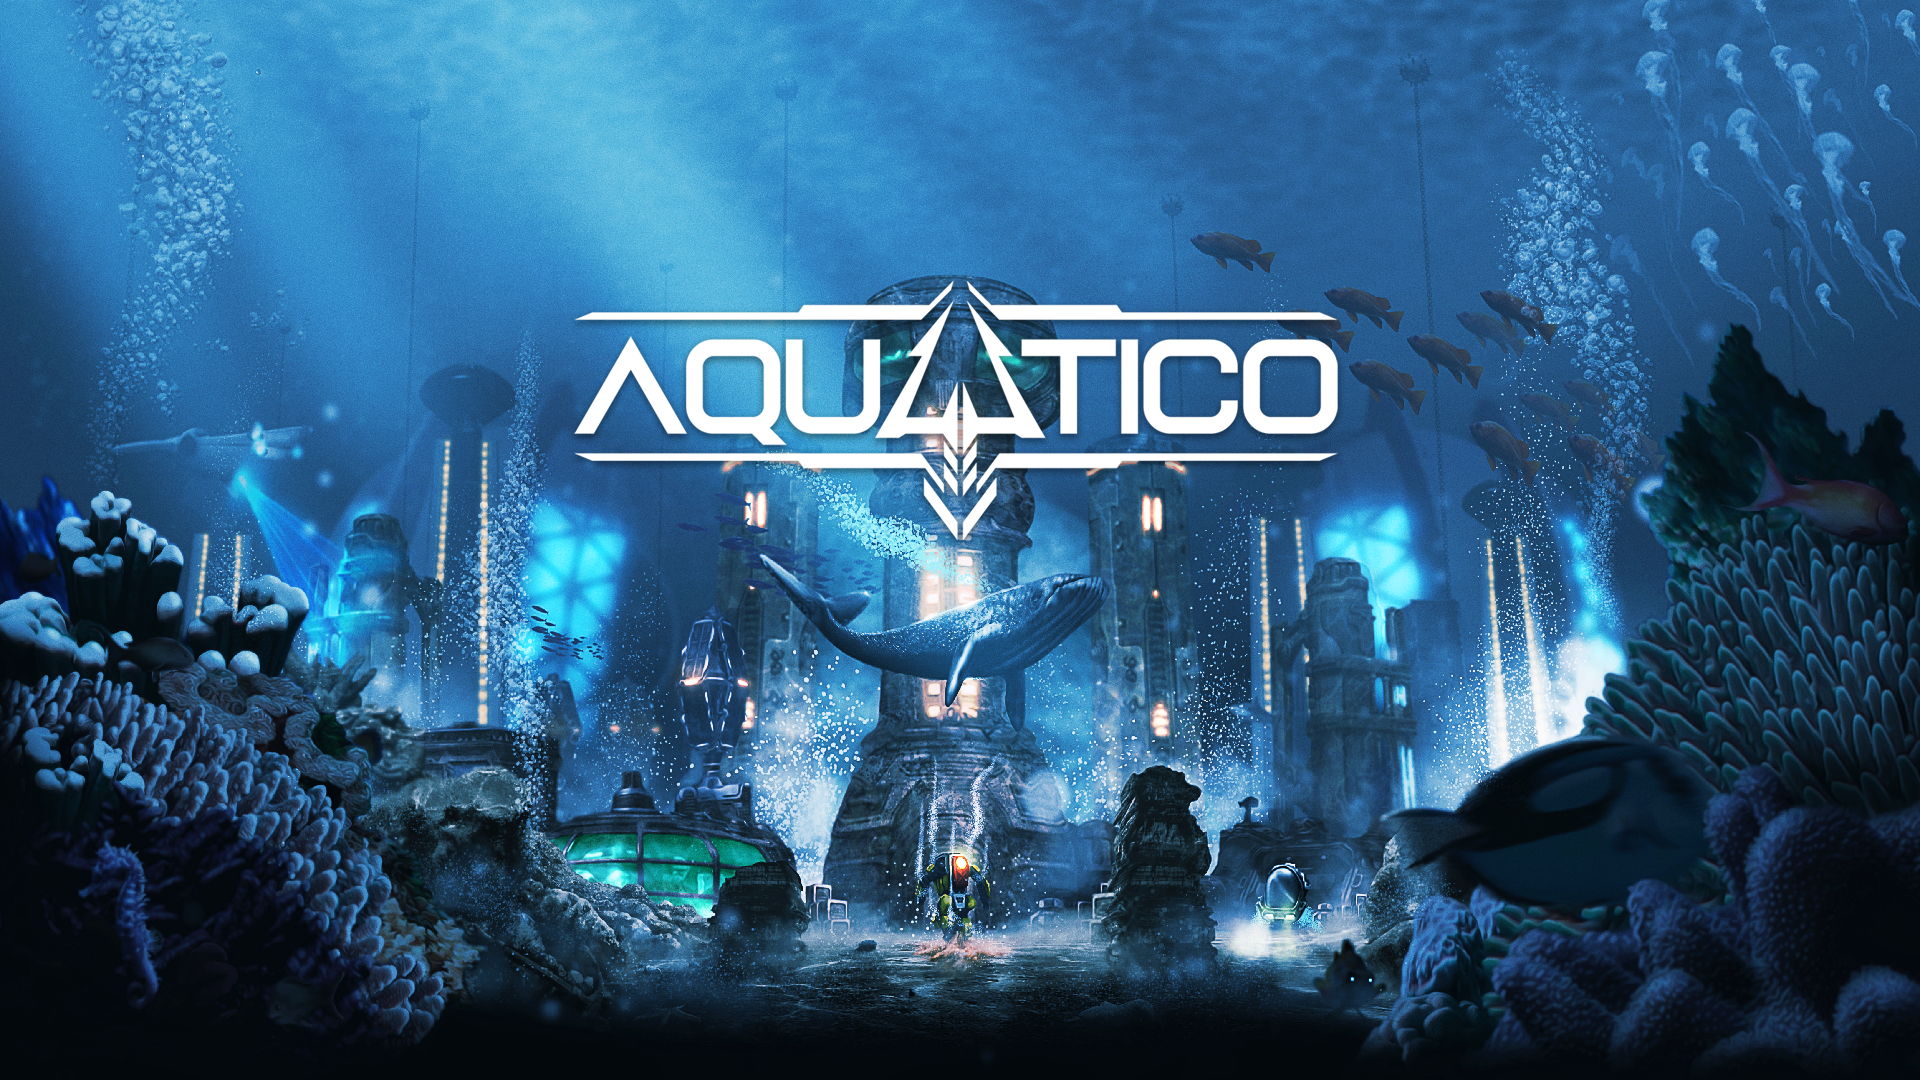 Underwater City Builder Aquatico Brings Fathoms of New Features in Major Update